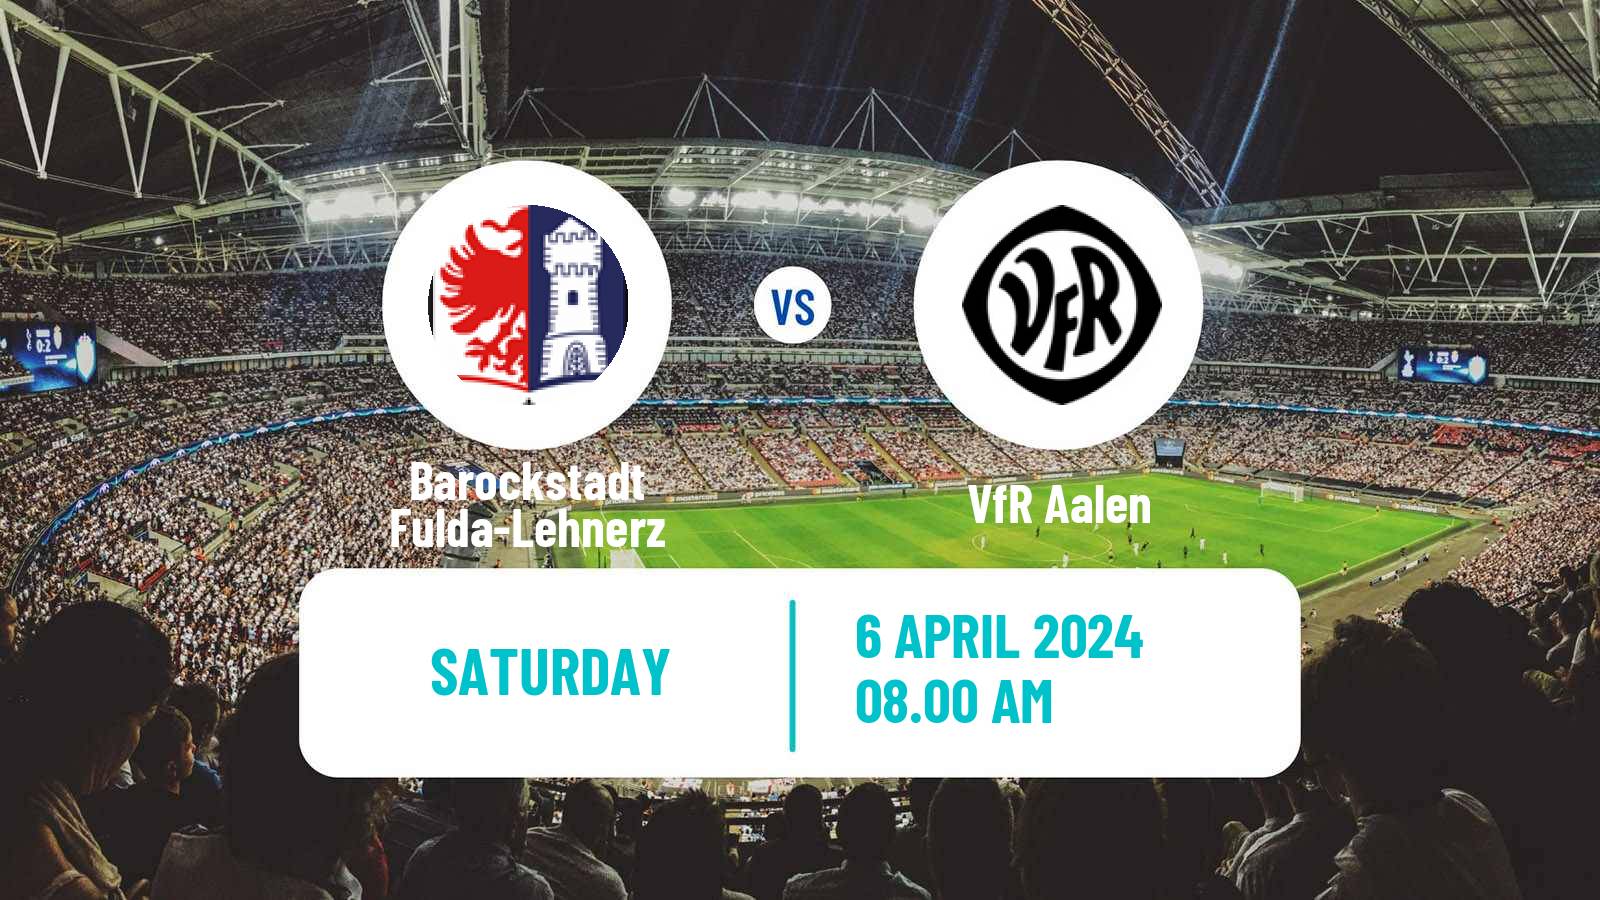 Soccer German Regionalliga Sudwest Barockstadt Fulda-Lehnerz - VfR Aalen